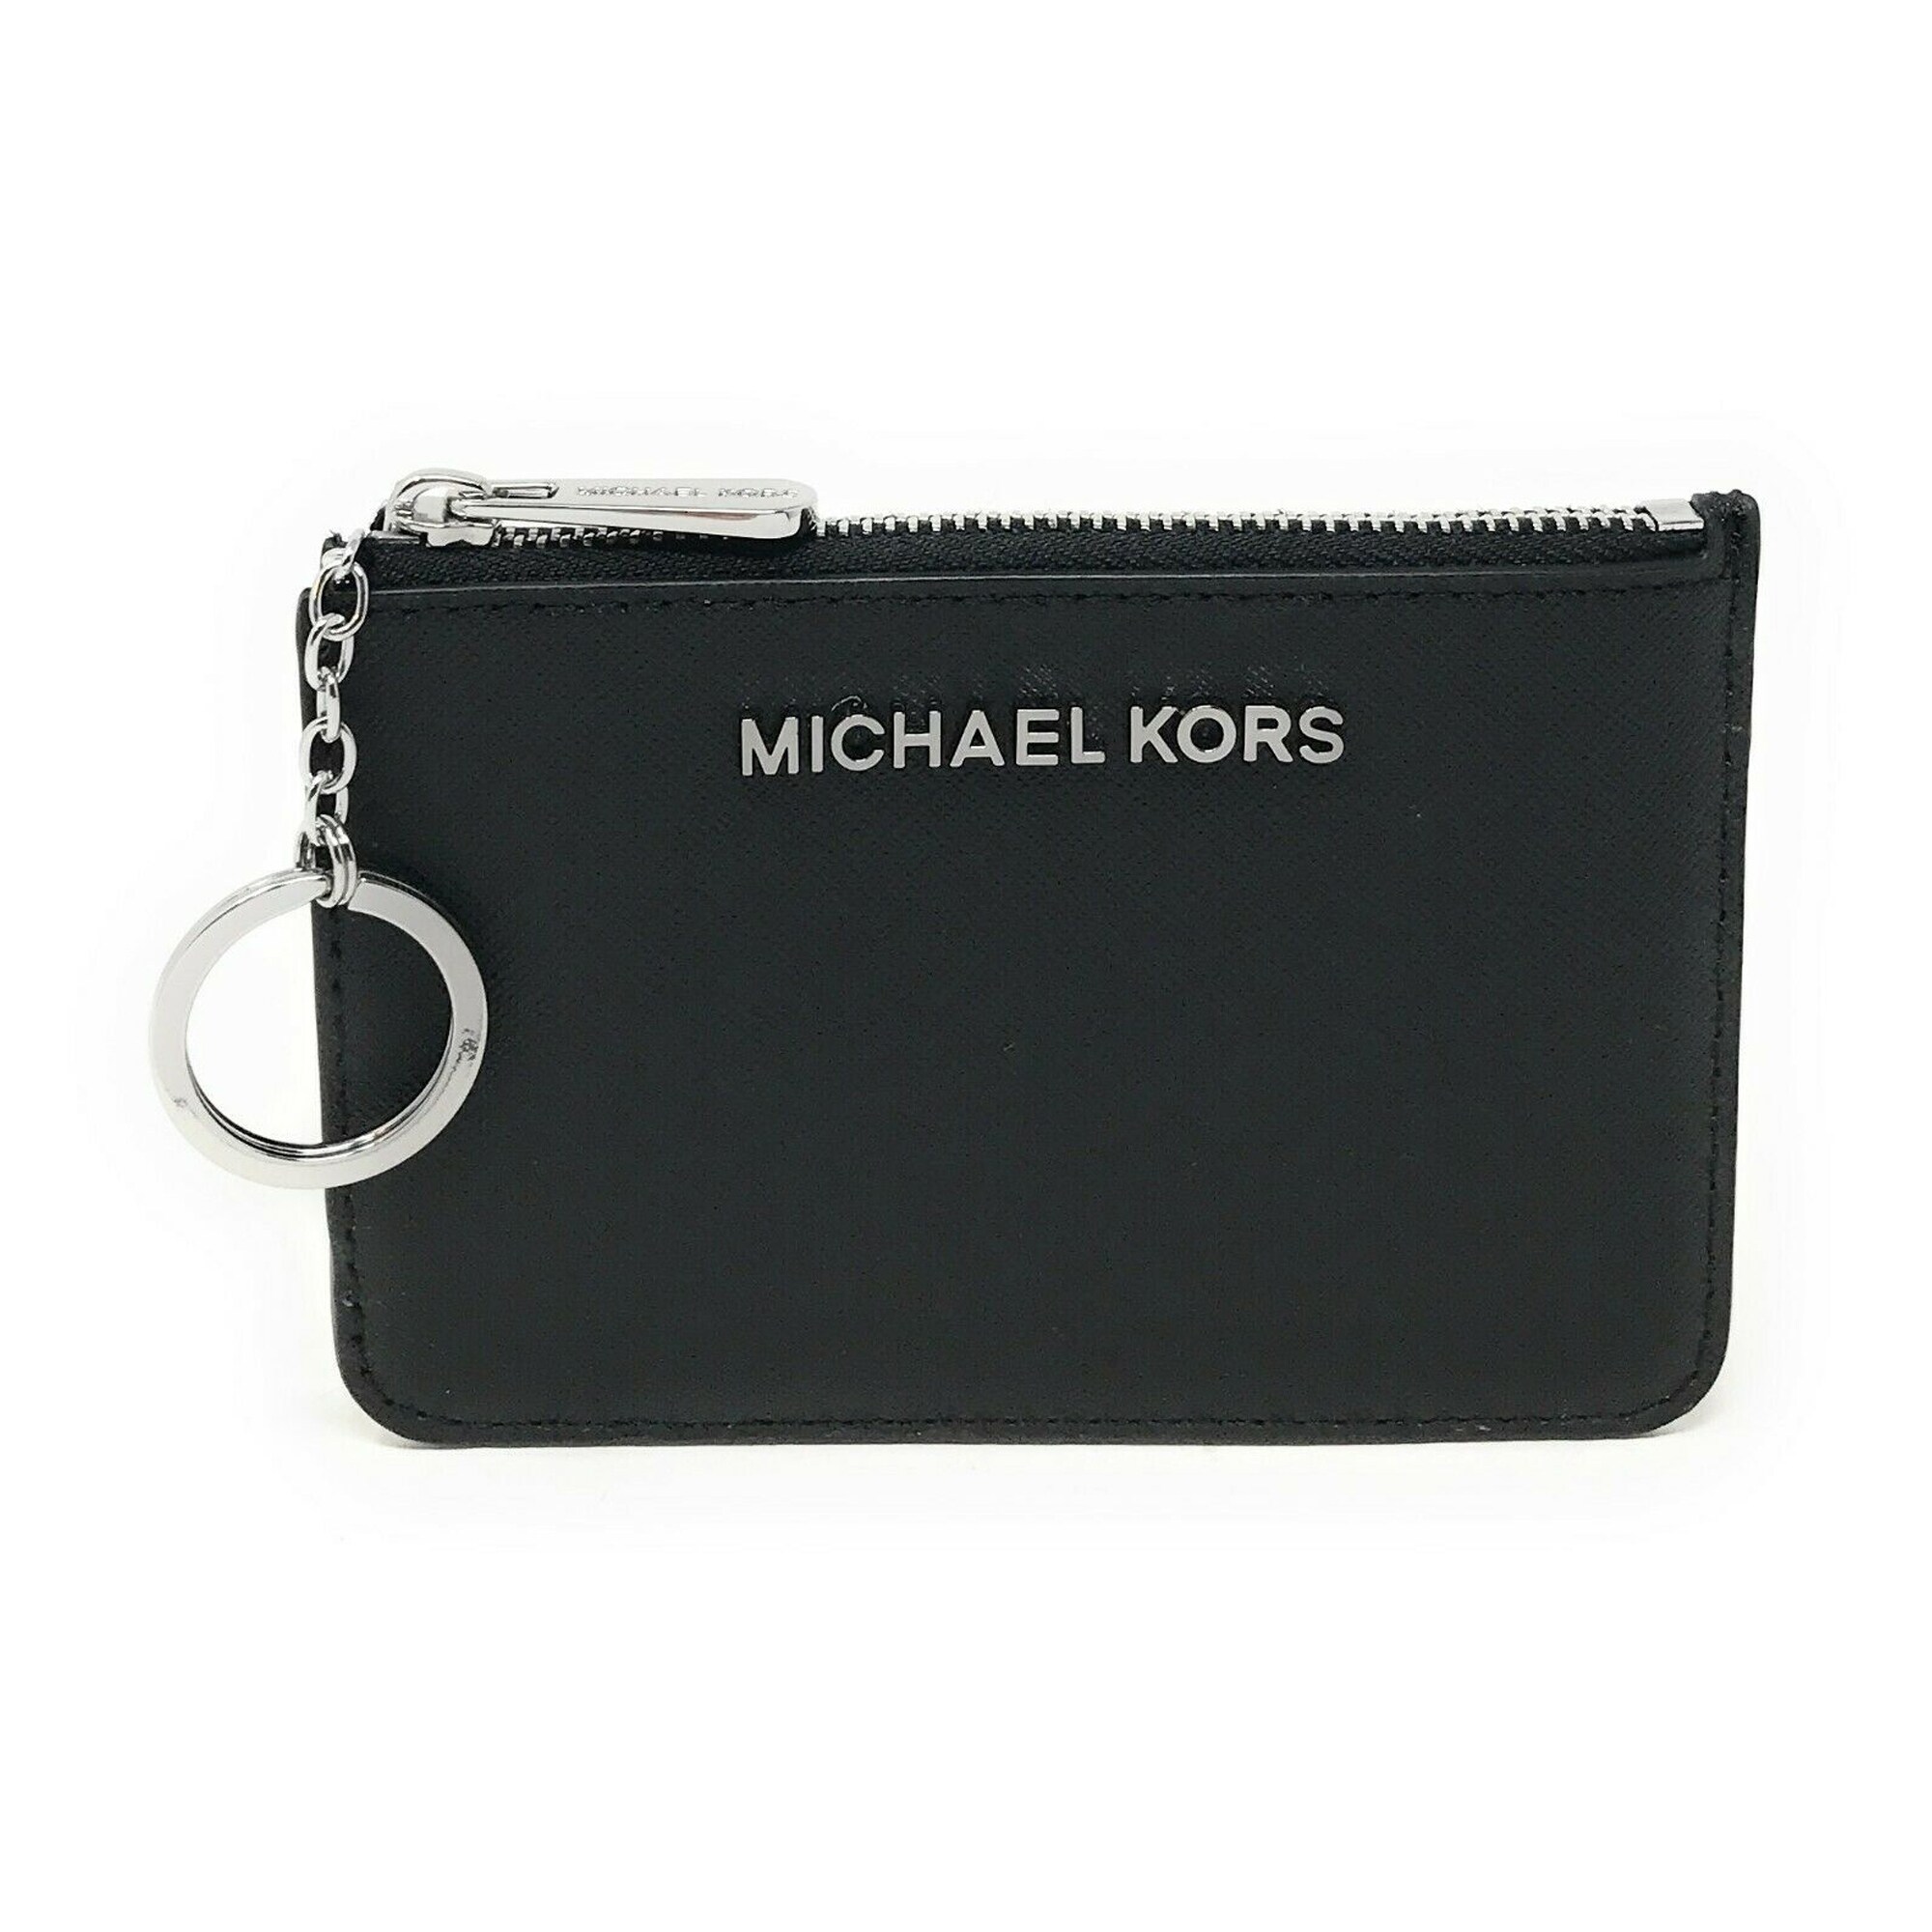 michael kors wallet with id window